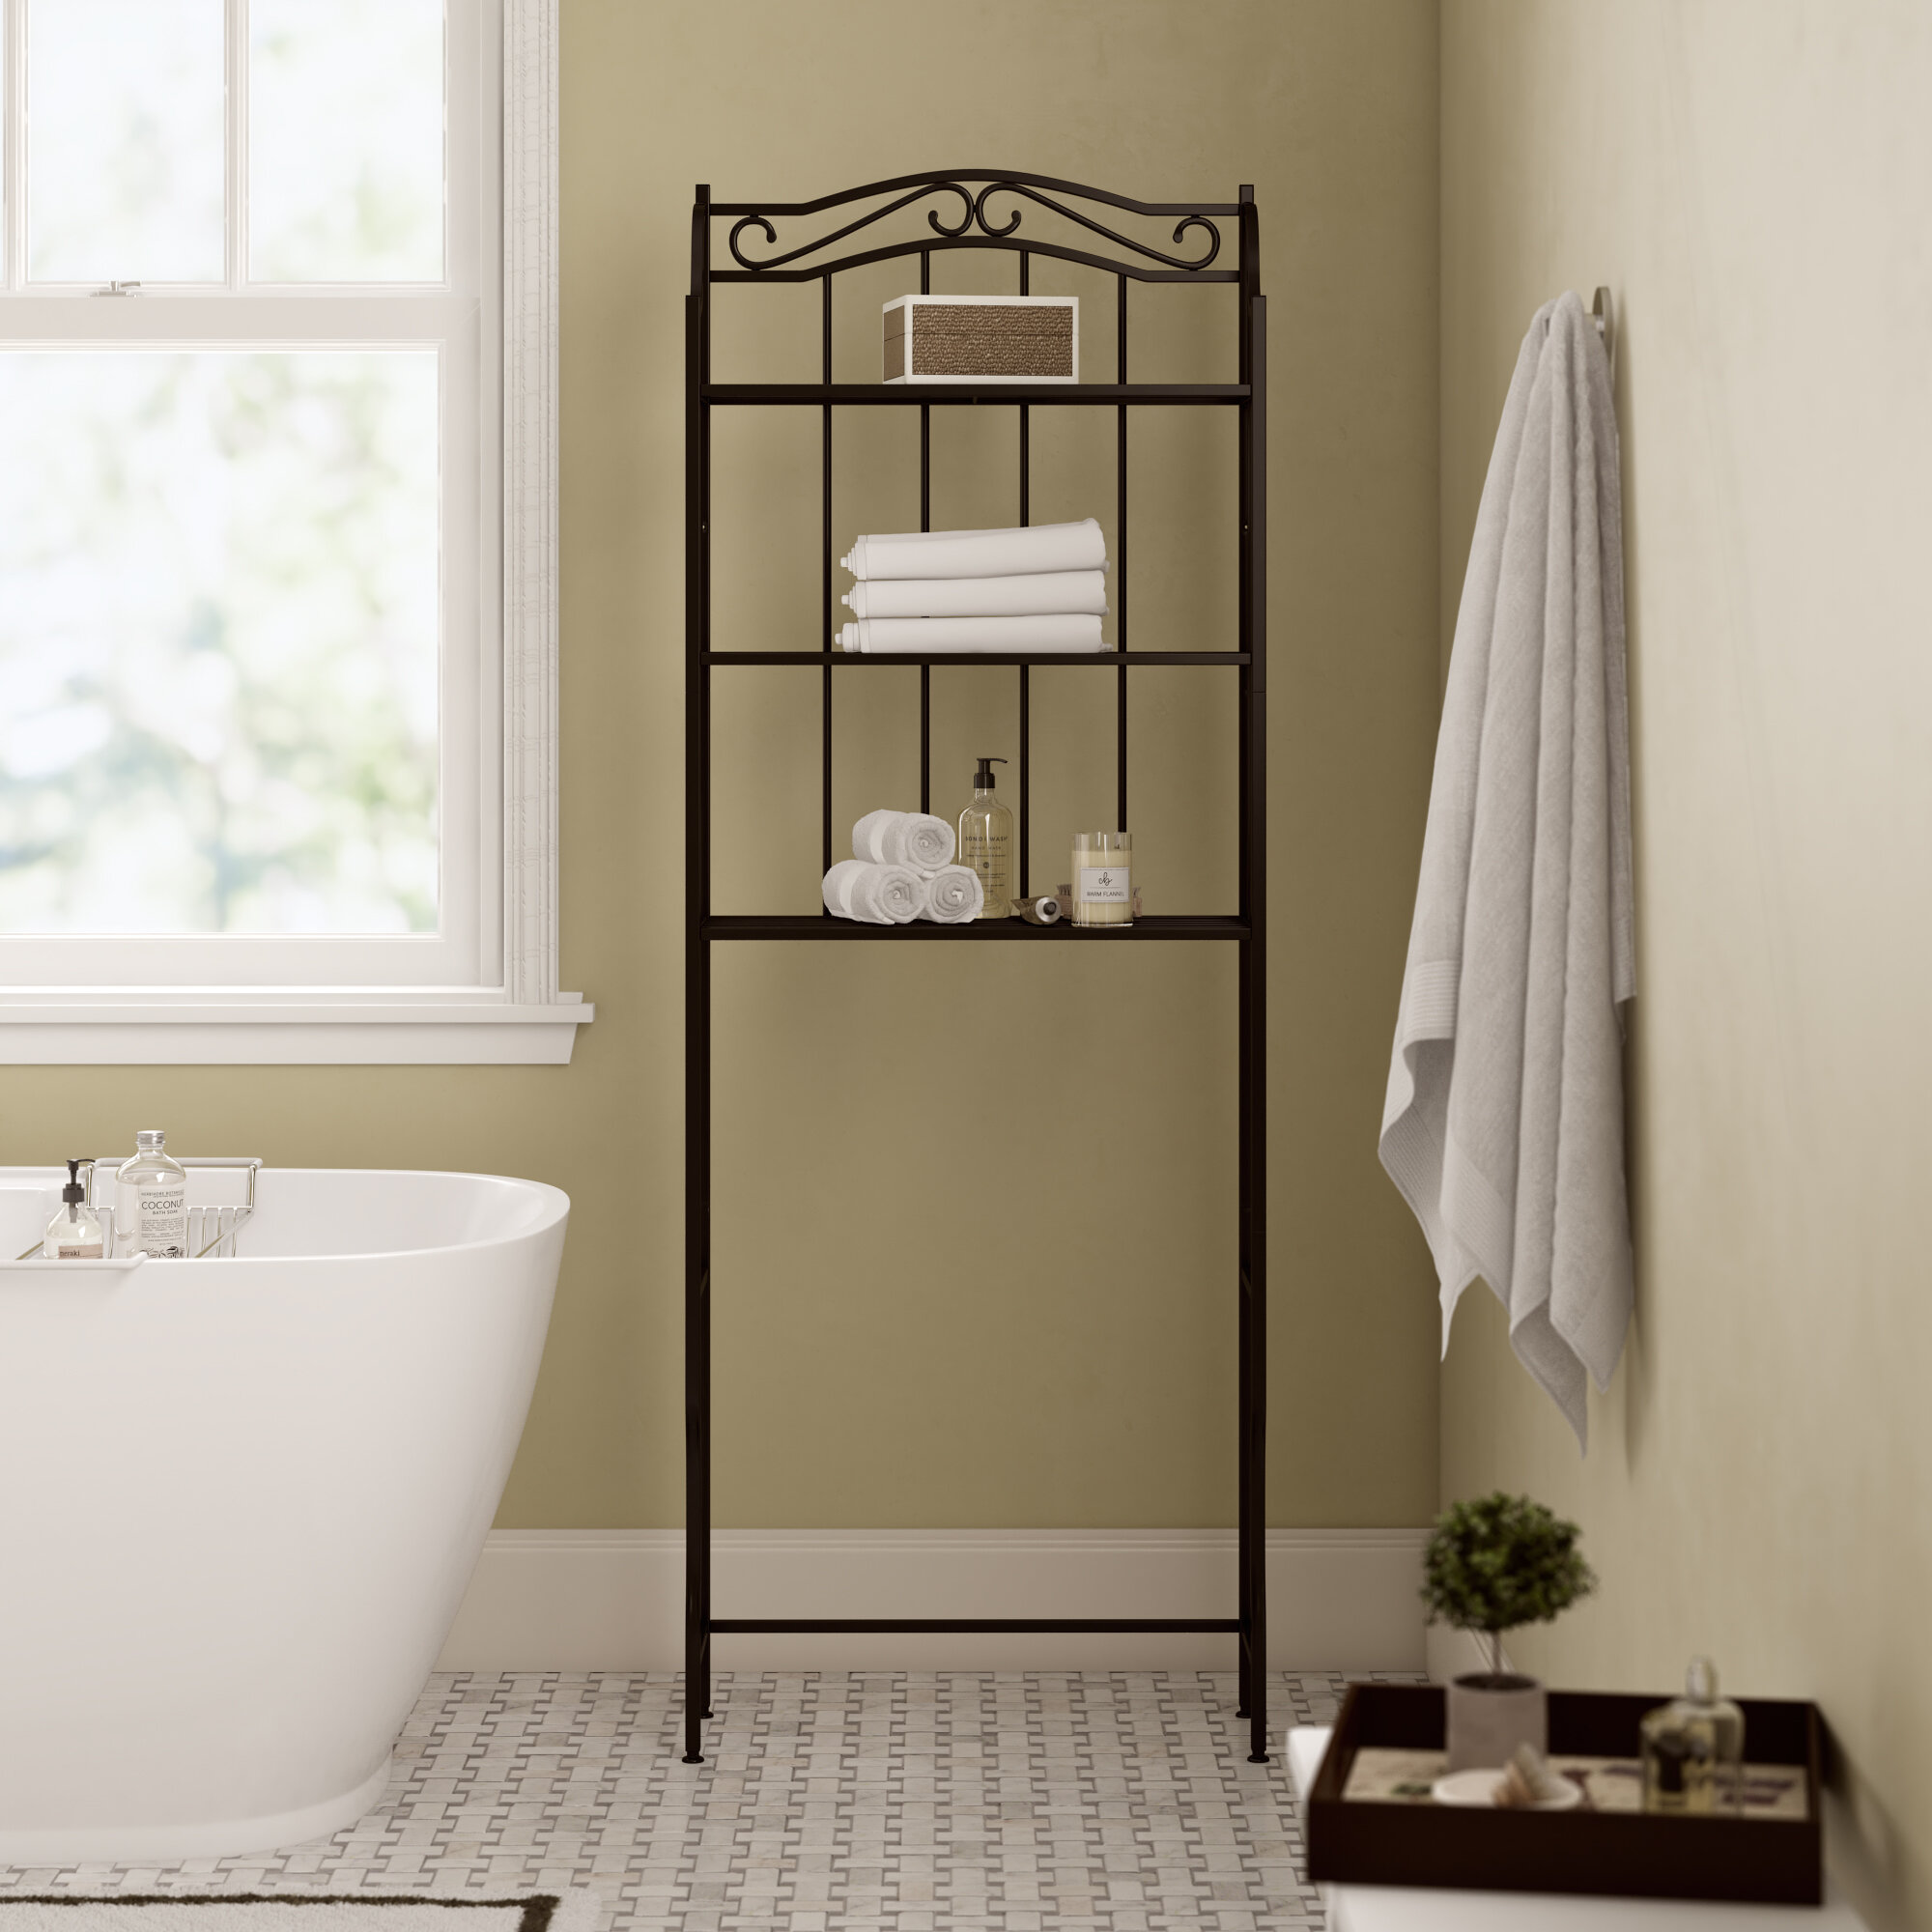 Details about   Bathroom Towel Rack Space Saver Oil Rubbed Bronze Decorative Metal Shelving Kit 